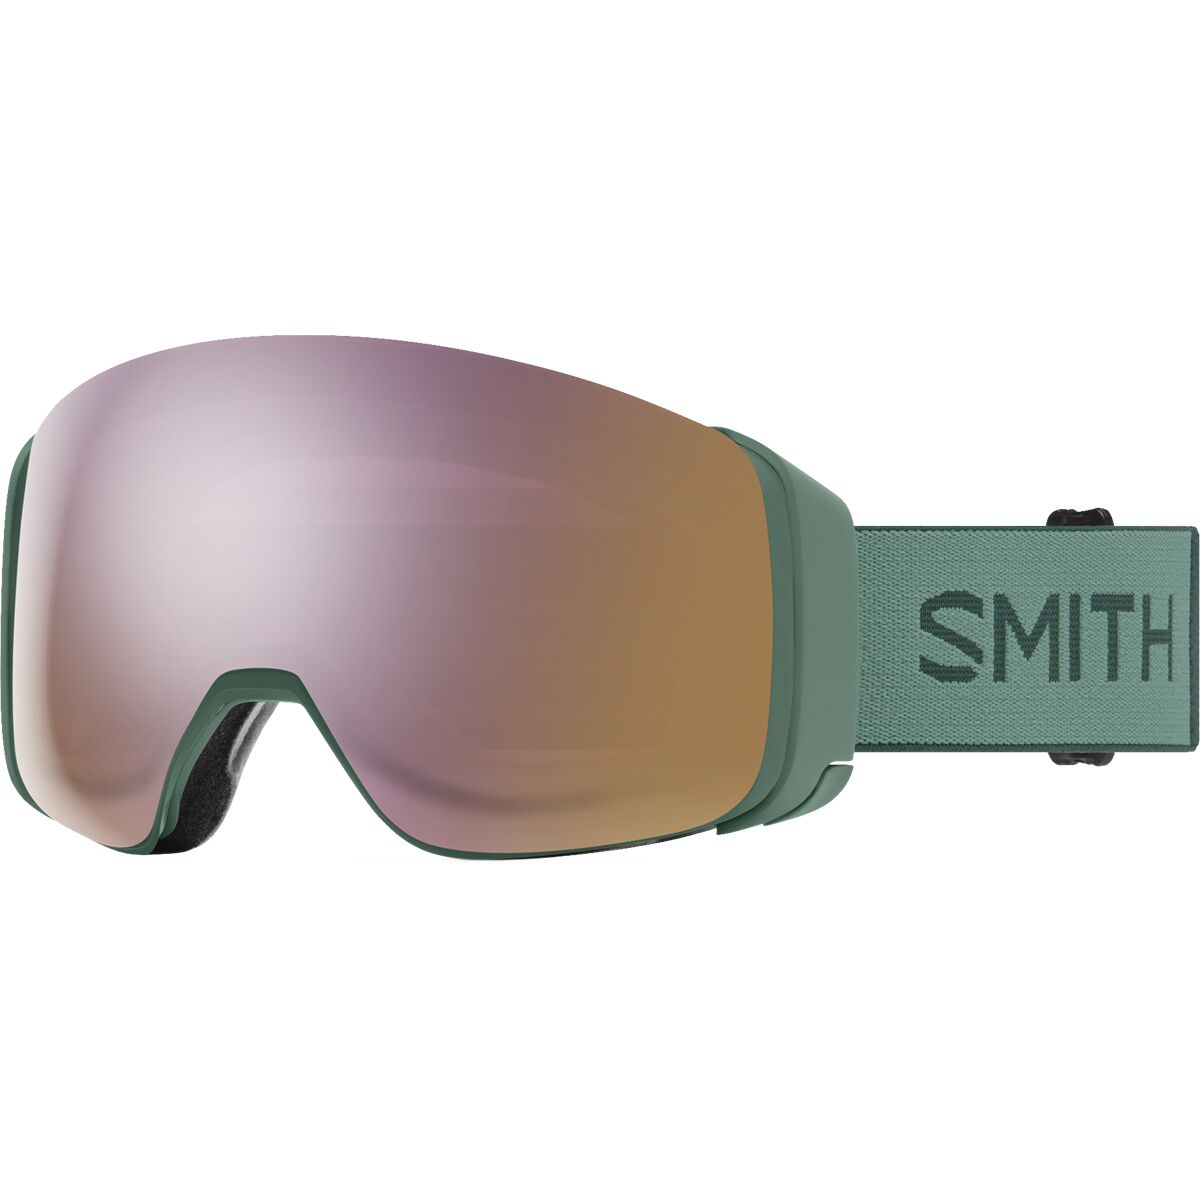 Smith 4D MAG ChromaPop Goggles